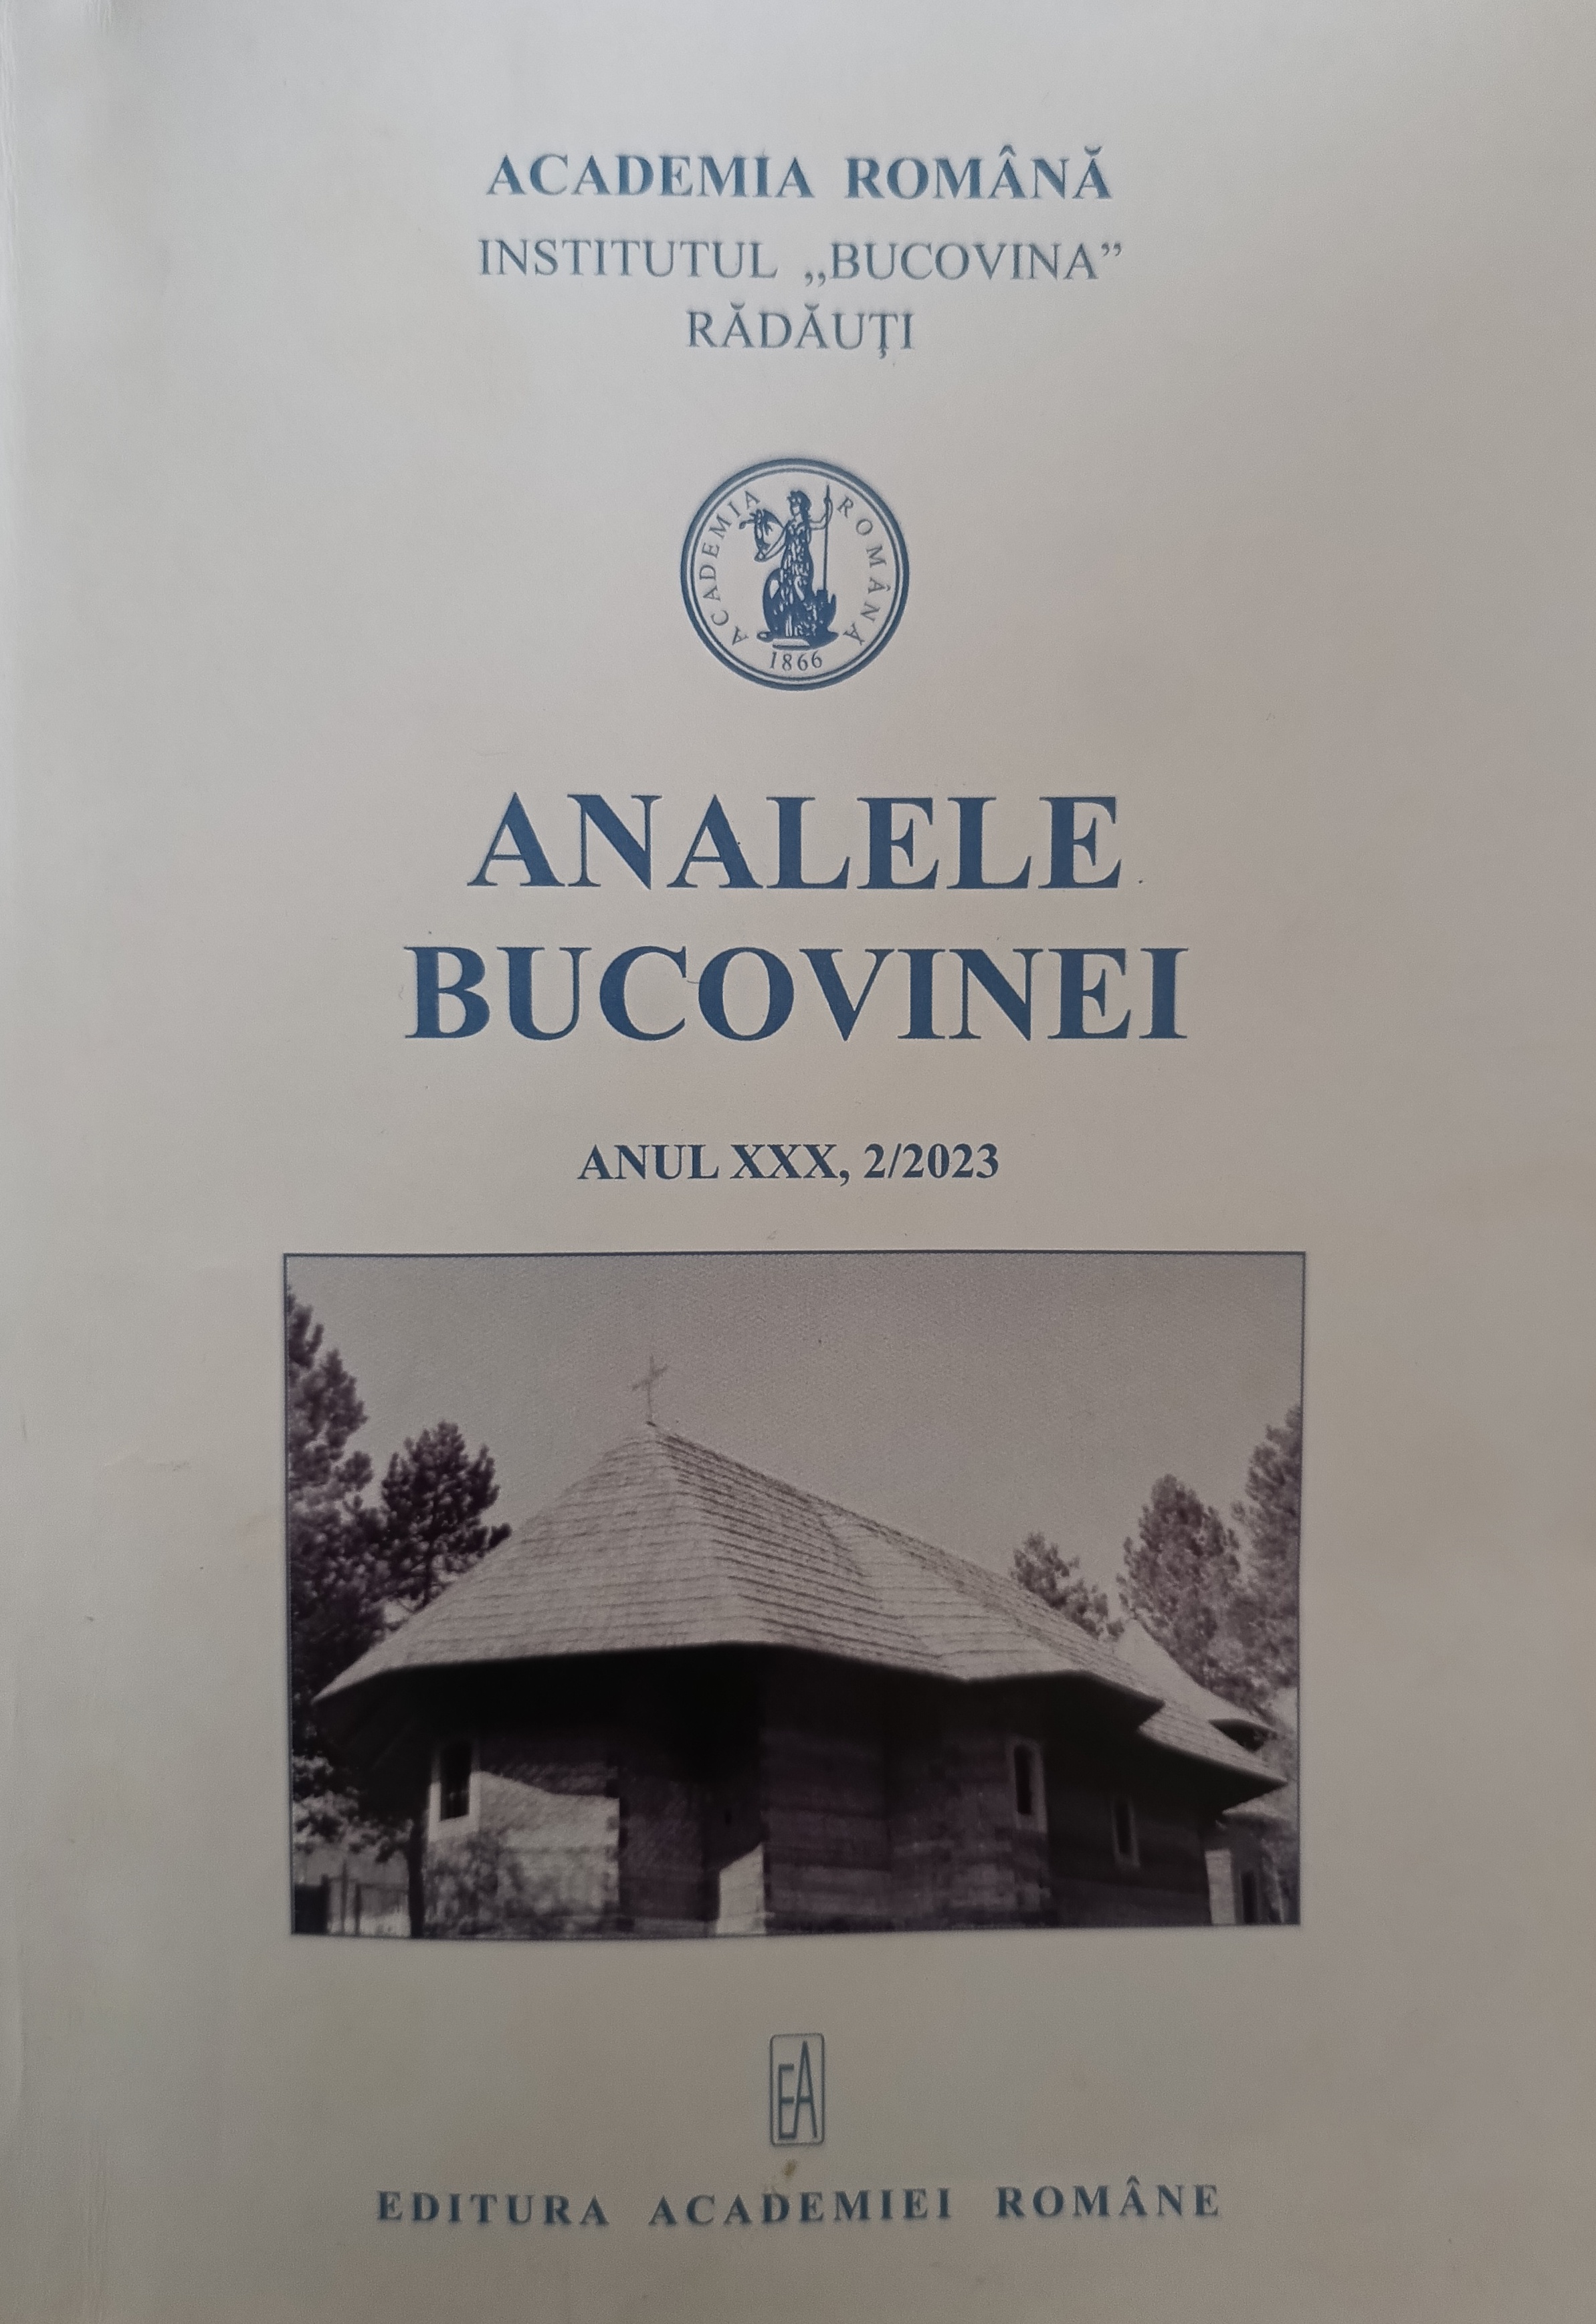 The Evolution of the Romanian-language Press 
in the Chernivtsi Region over the Last Two Decades Cover Image